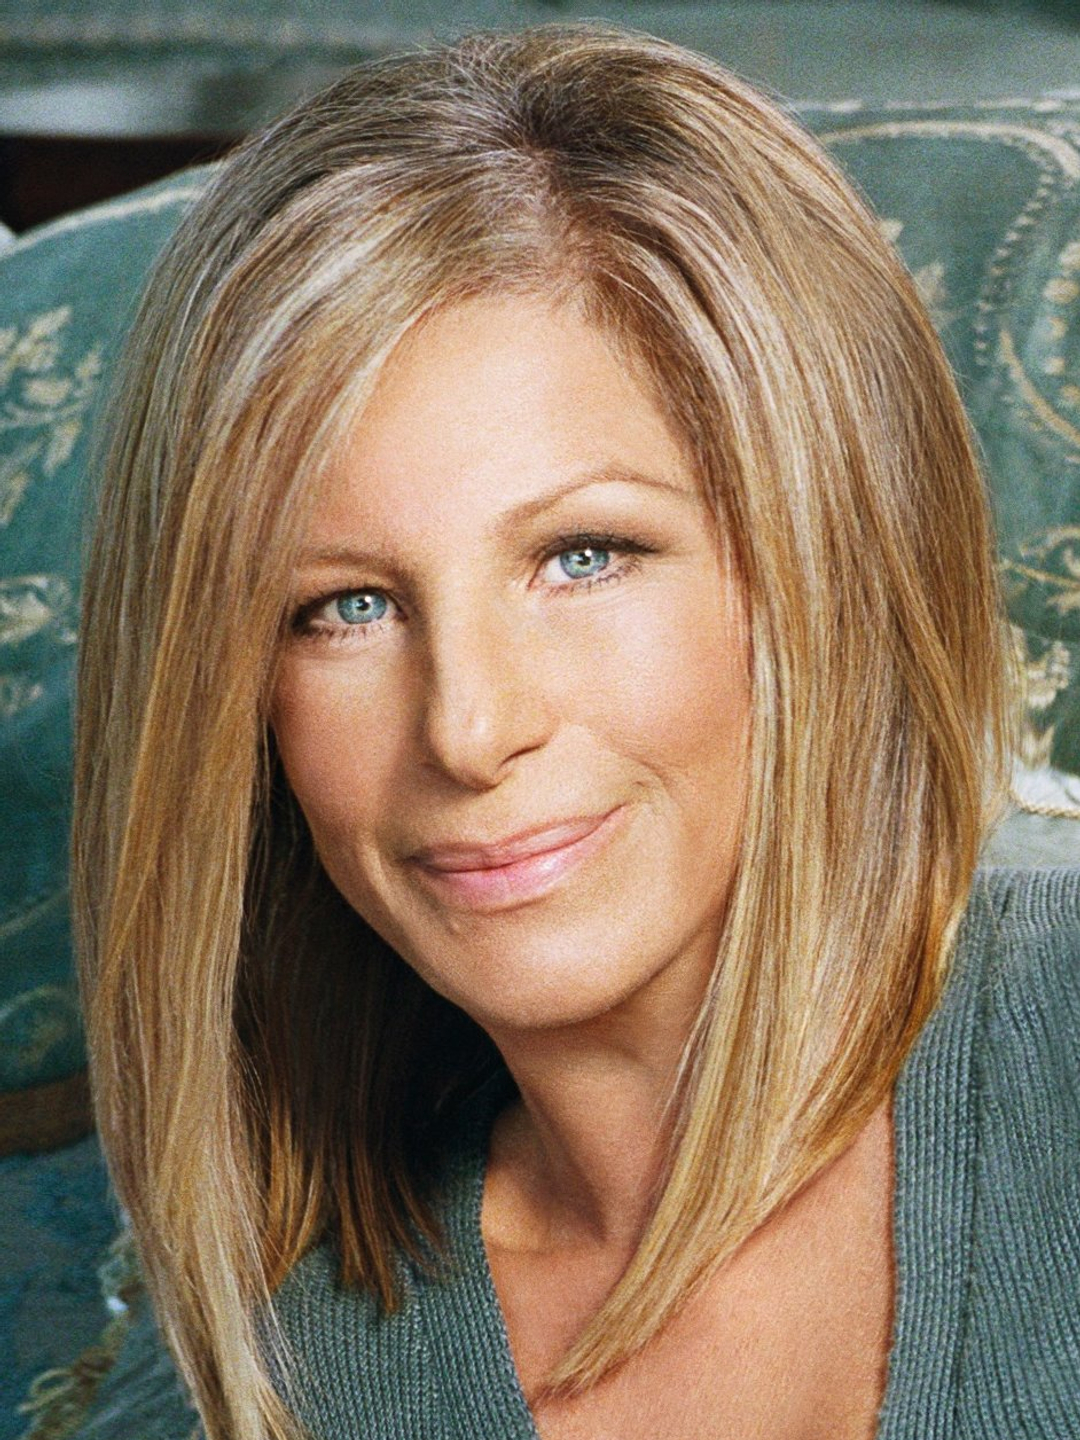 Barbra Streisand life path